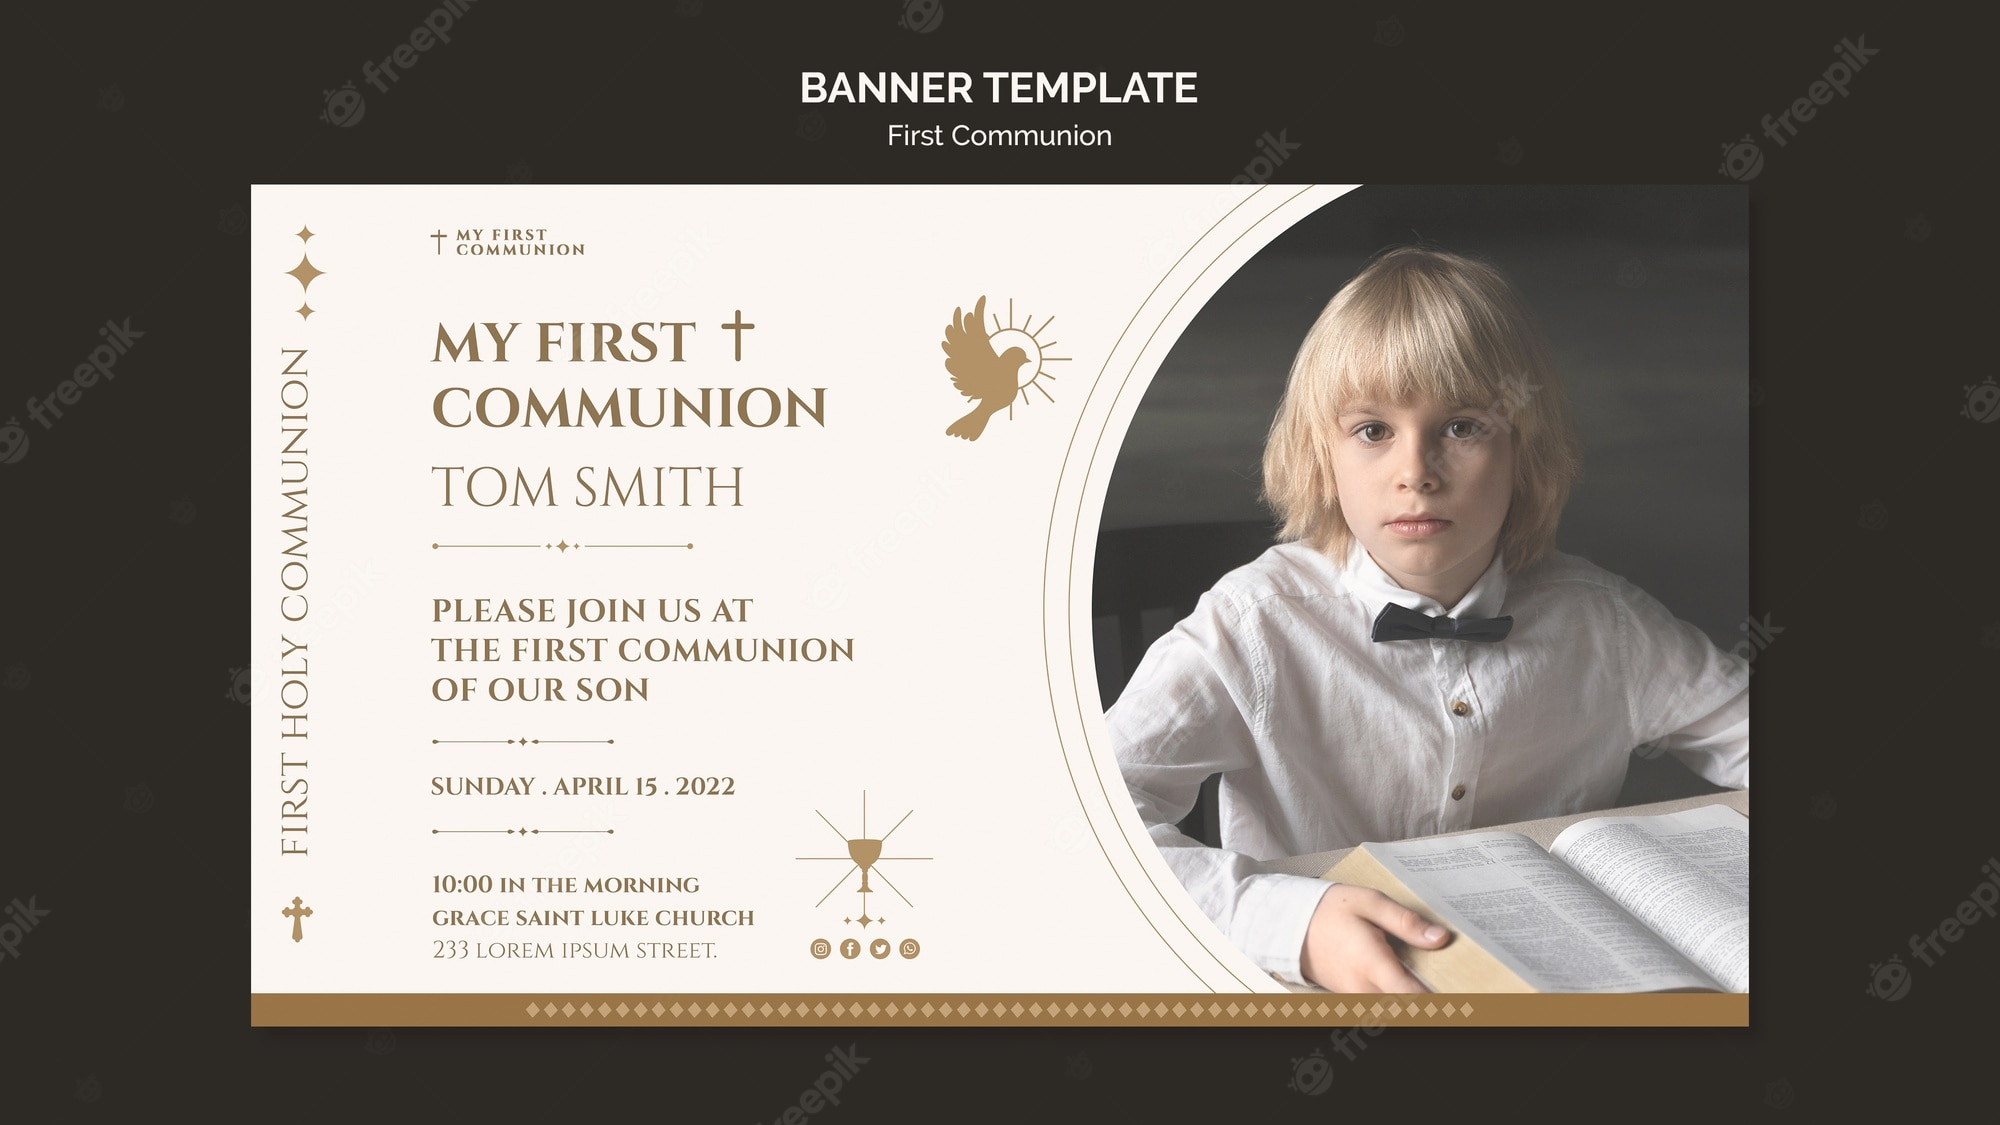 Free PSD  Flat design first communion banner template For First Communion Banner Templates